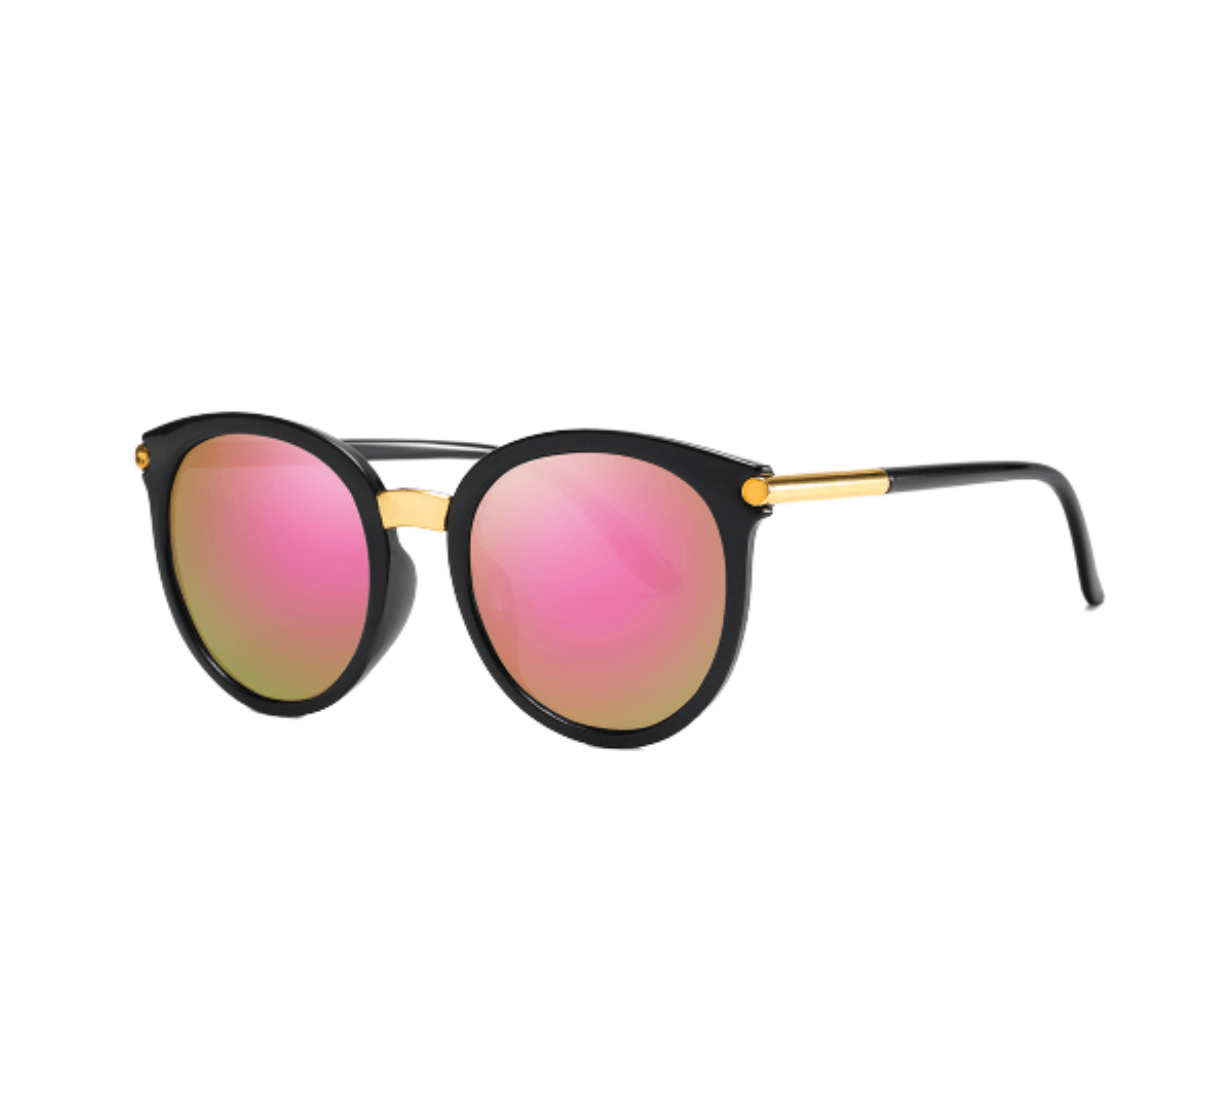 Sunglasses Manufacturer in China - Factorie Sunglasses_Fashion Sunglasses for Women